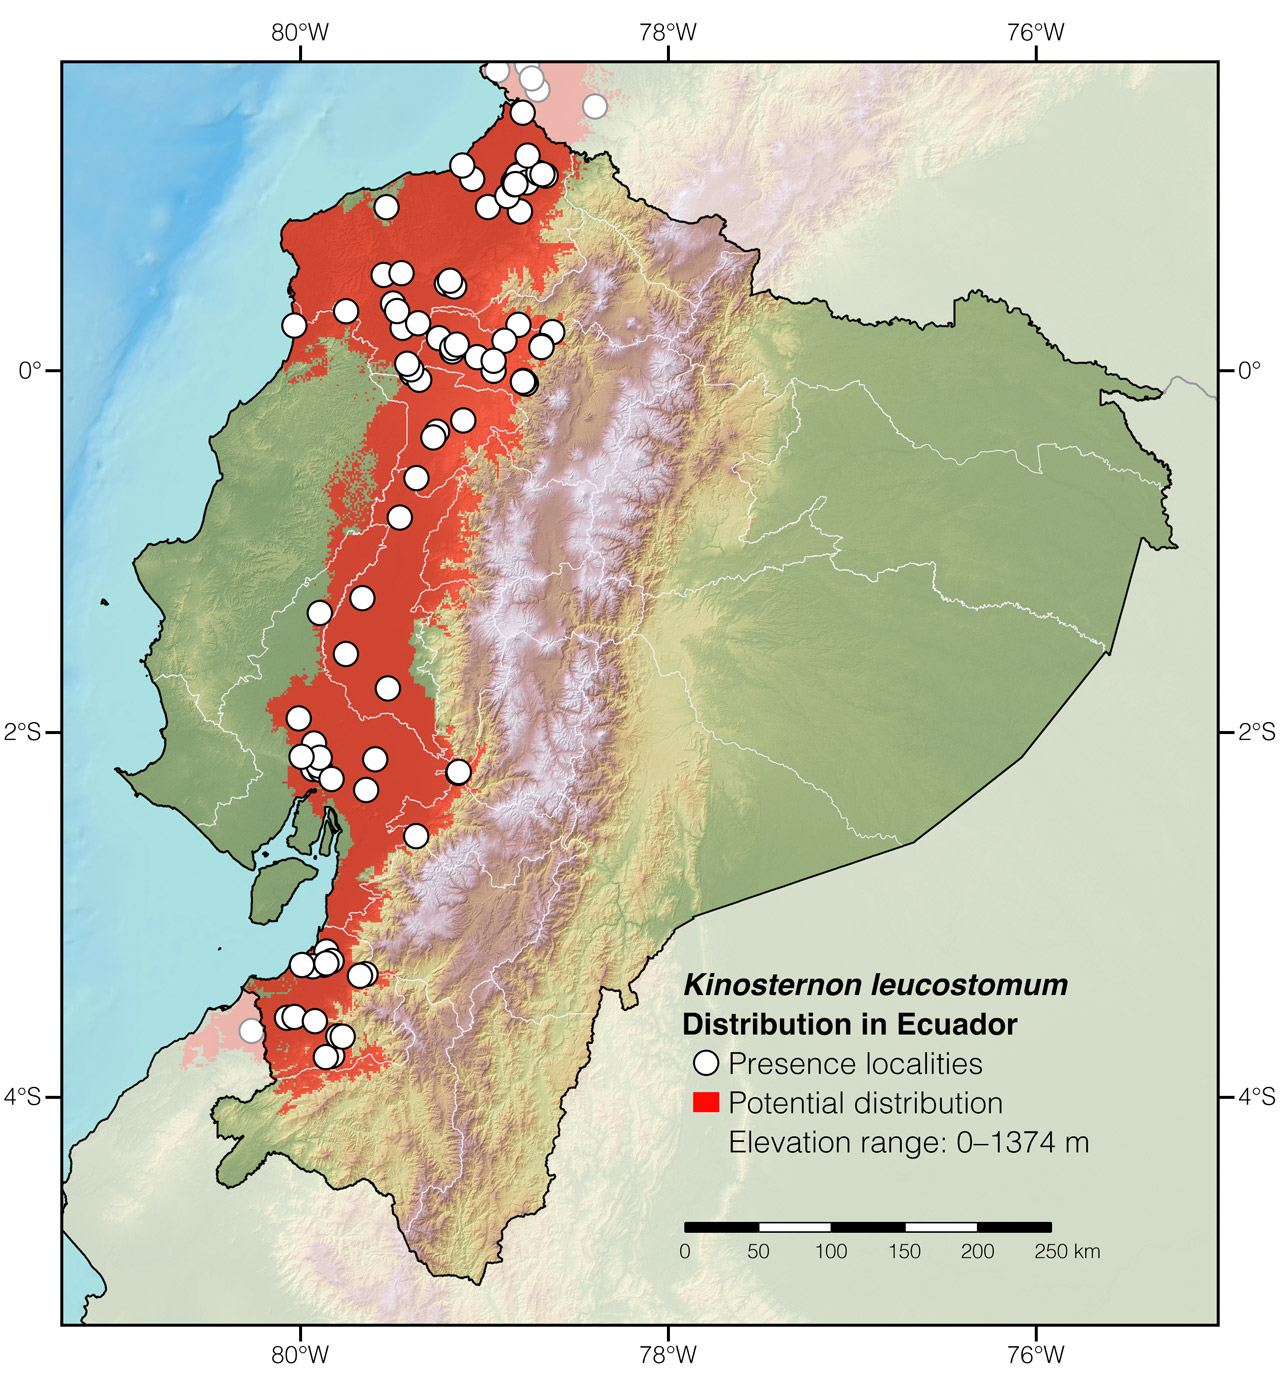 Distribution of Kinosternon leucostomum in Ecuador